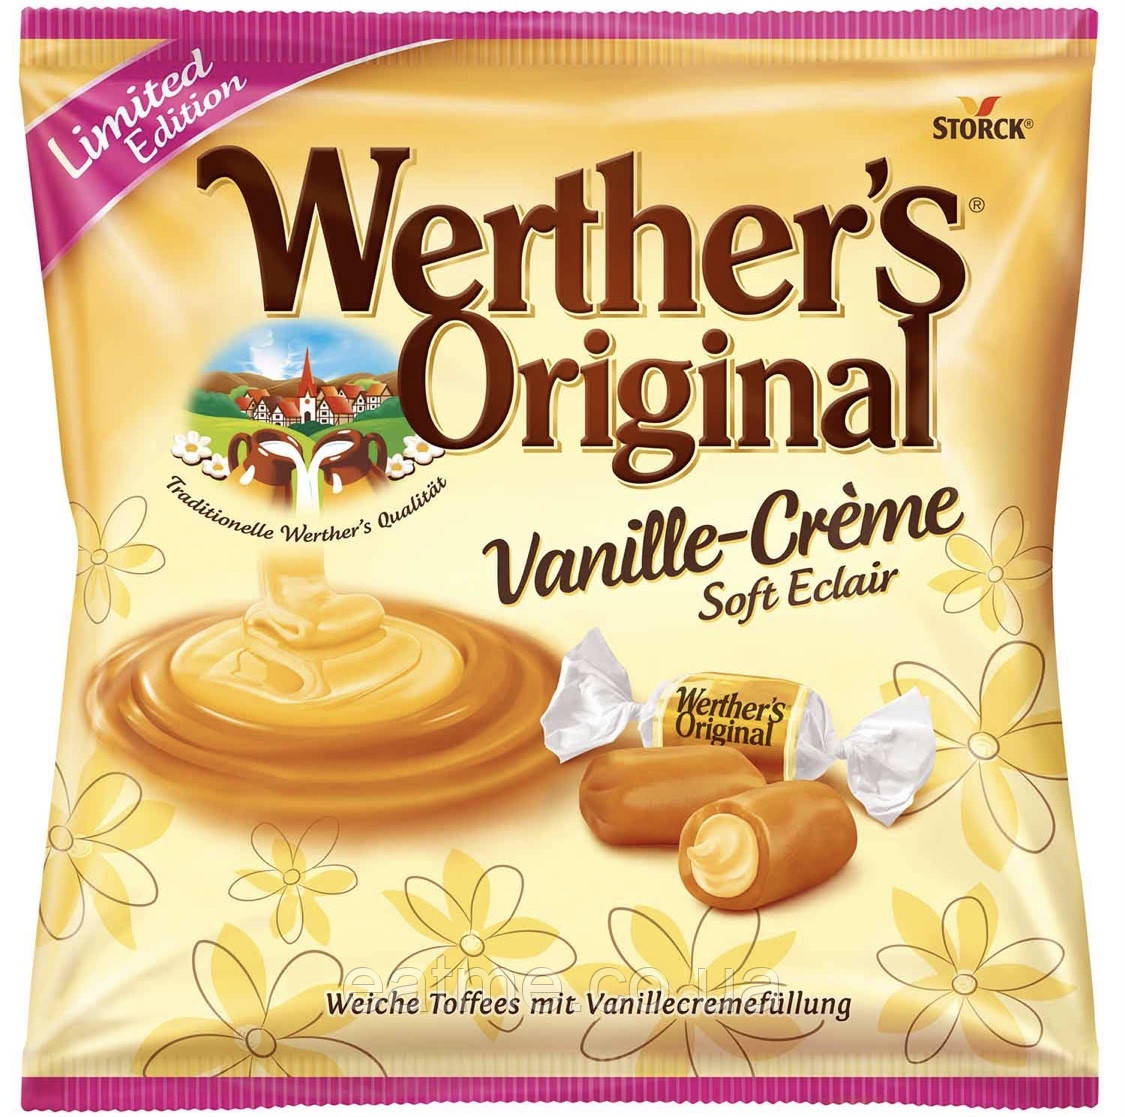 Werther's Original Soft Eclair Vanille-Crème Карамель із ванільним кремом 180g